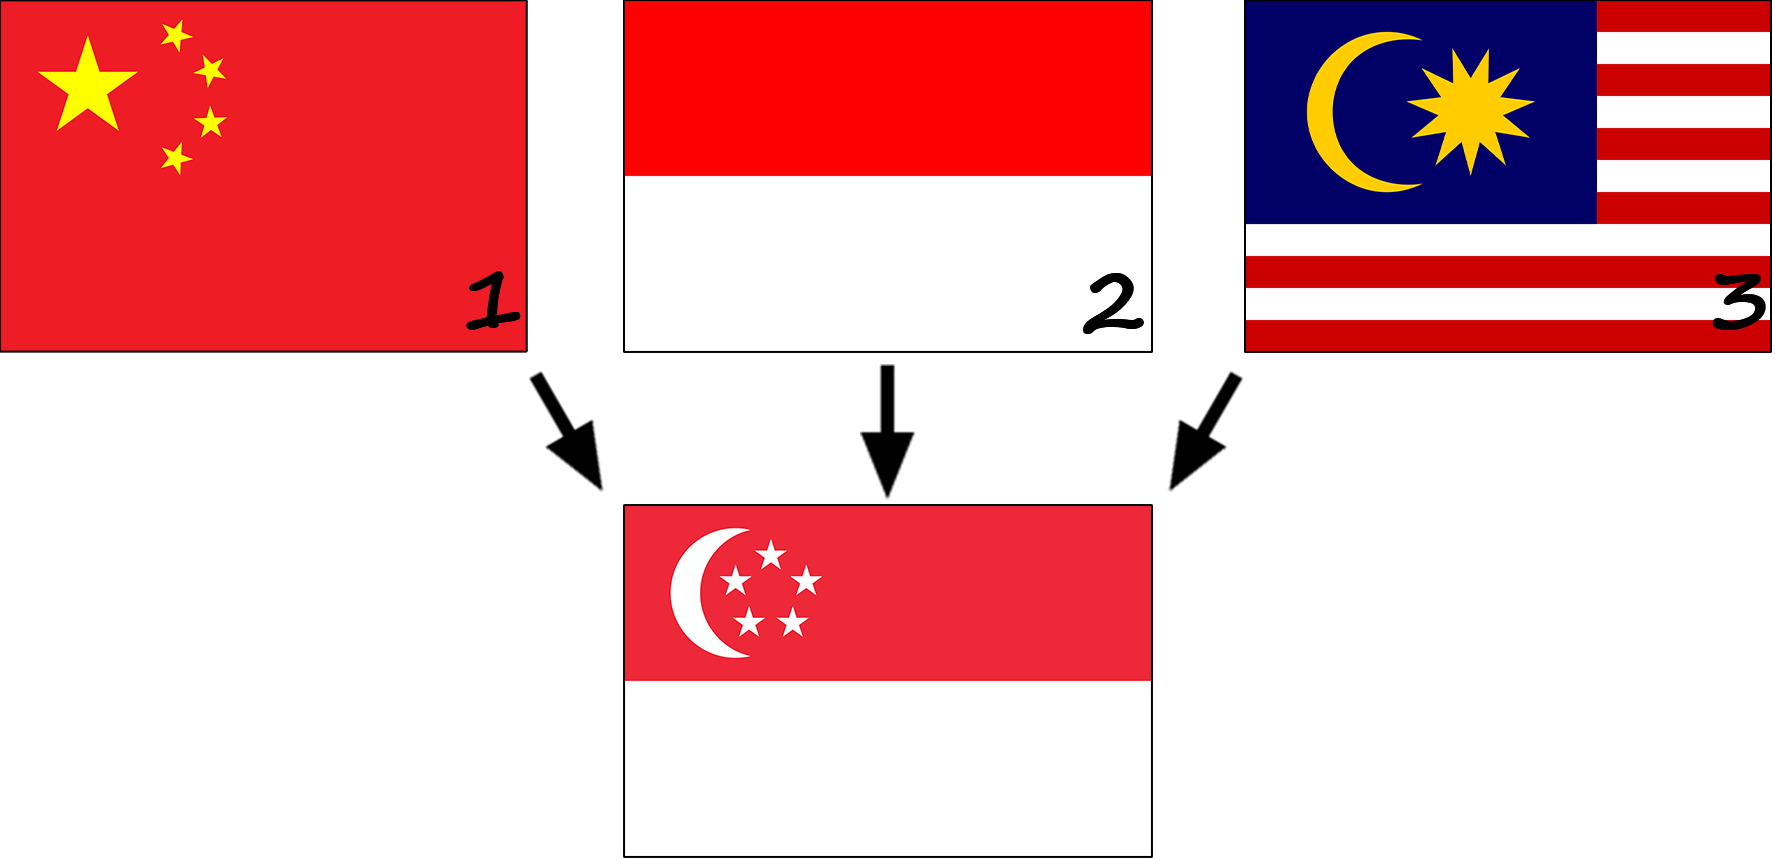 Як виник прапор Сінгапуру? Історія прапору Сінгапуру